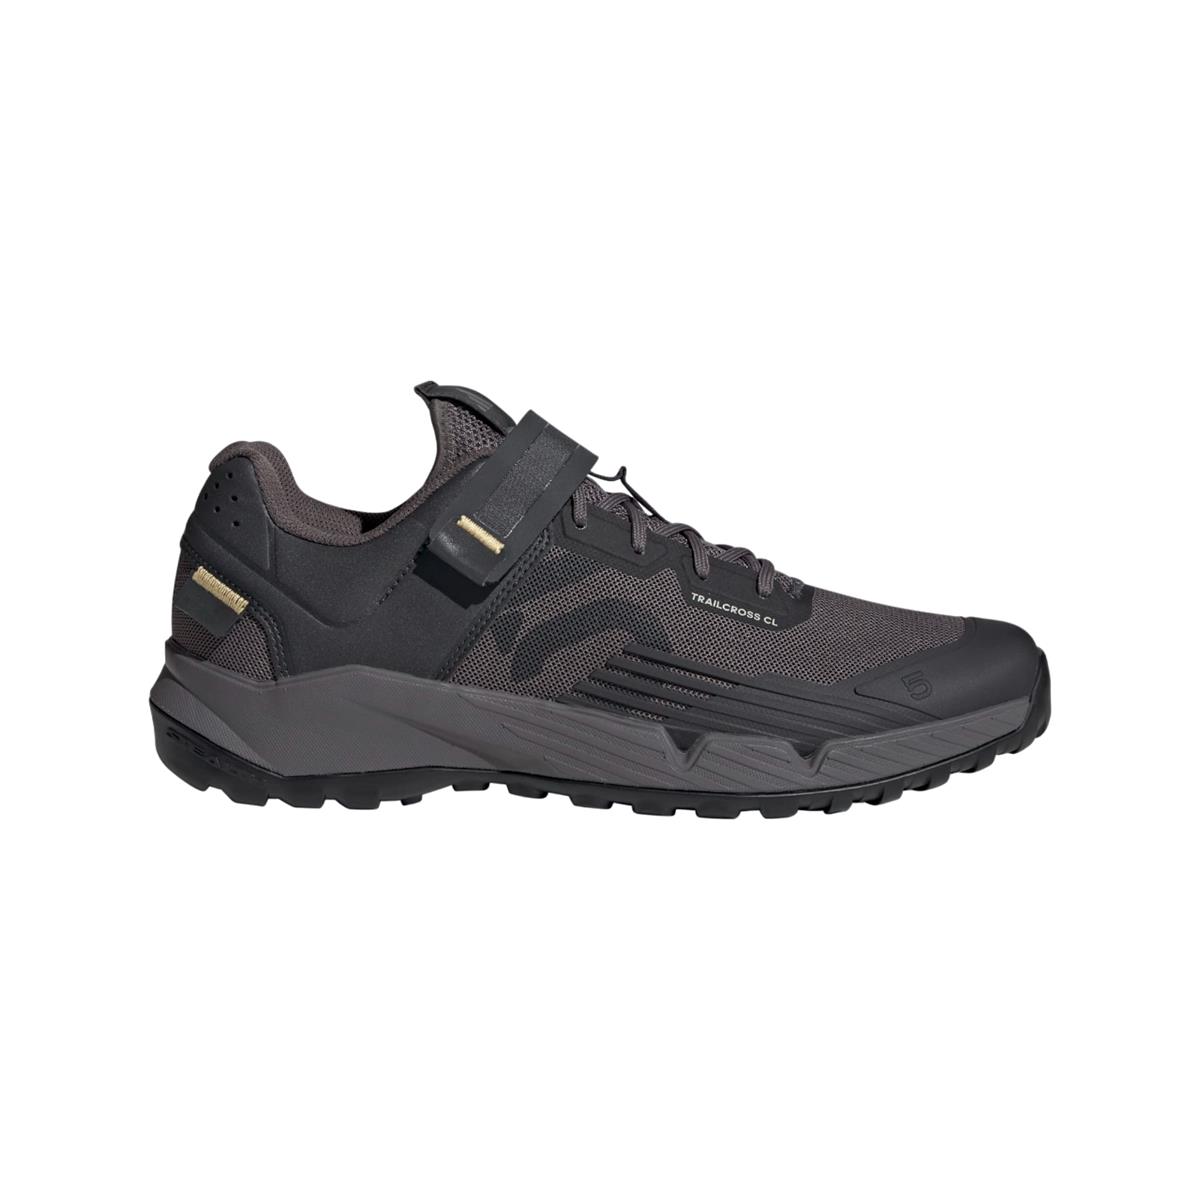 Clip 5.10 Trailcross MTB-Schuhe, Schwarz/Grau/Beige, Größe 38,5